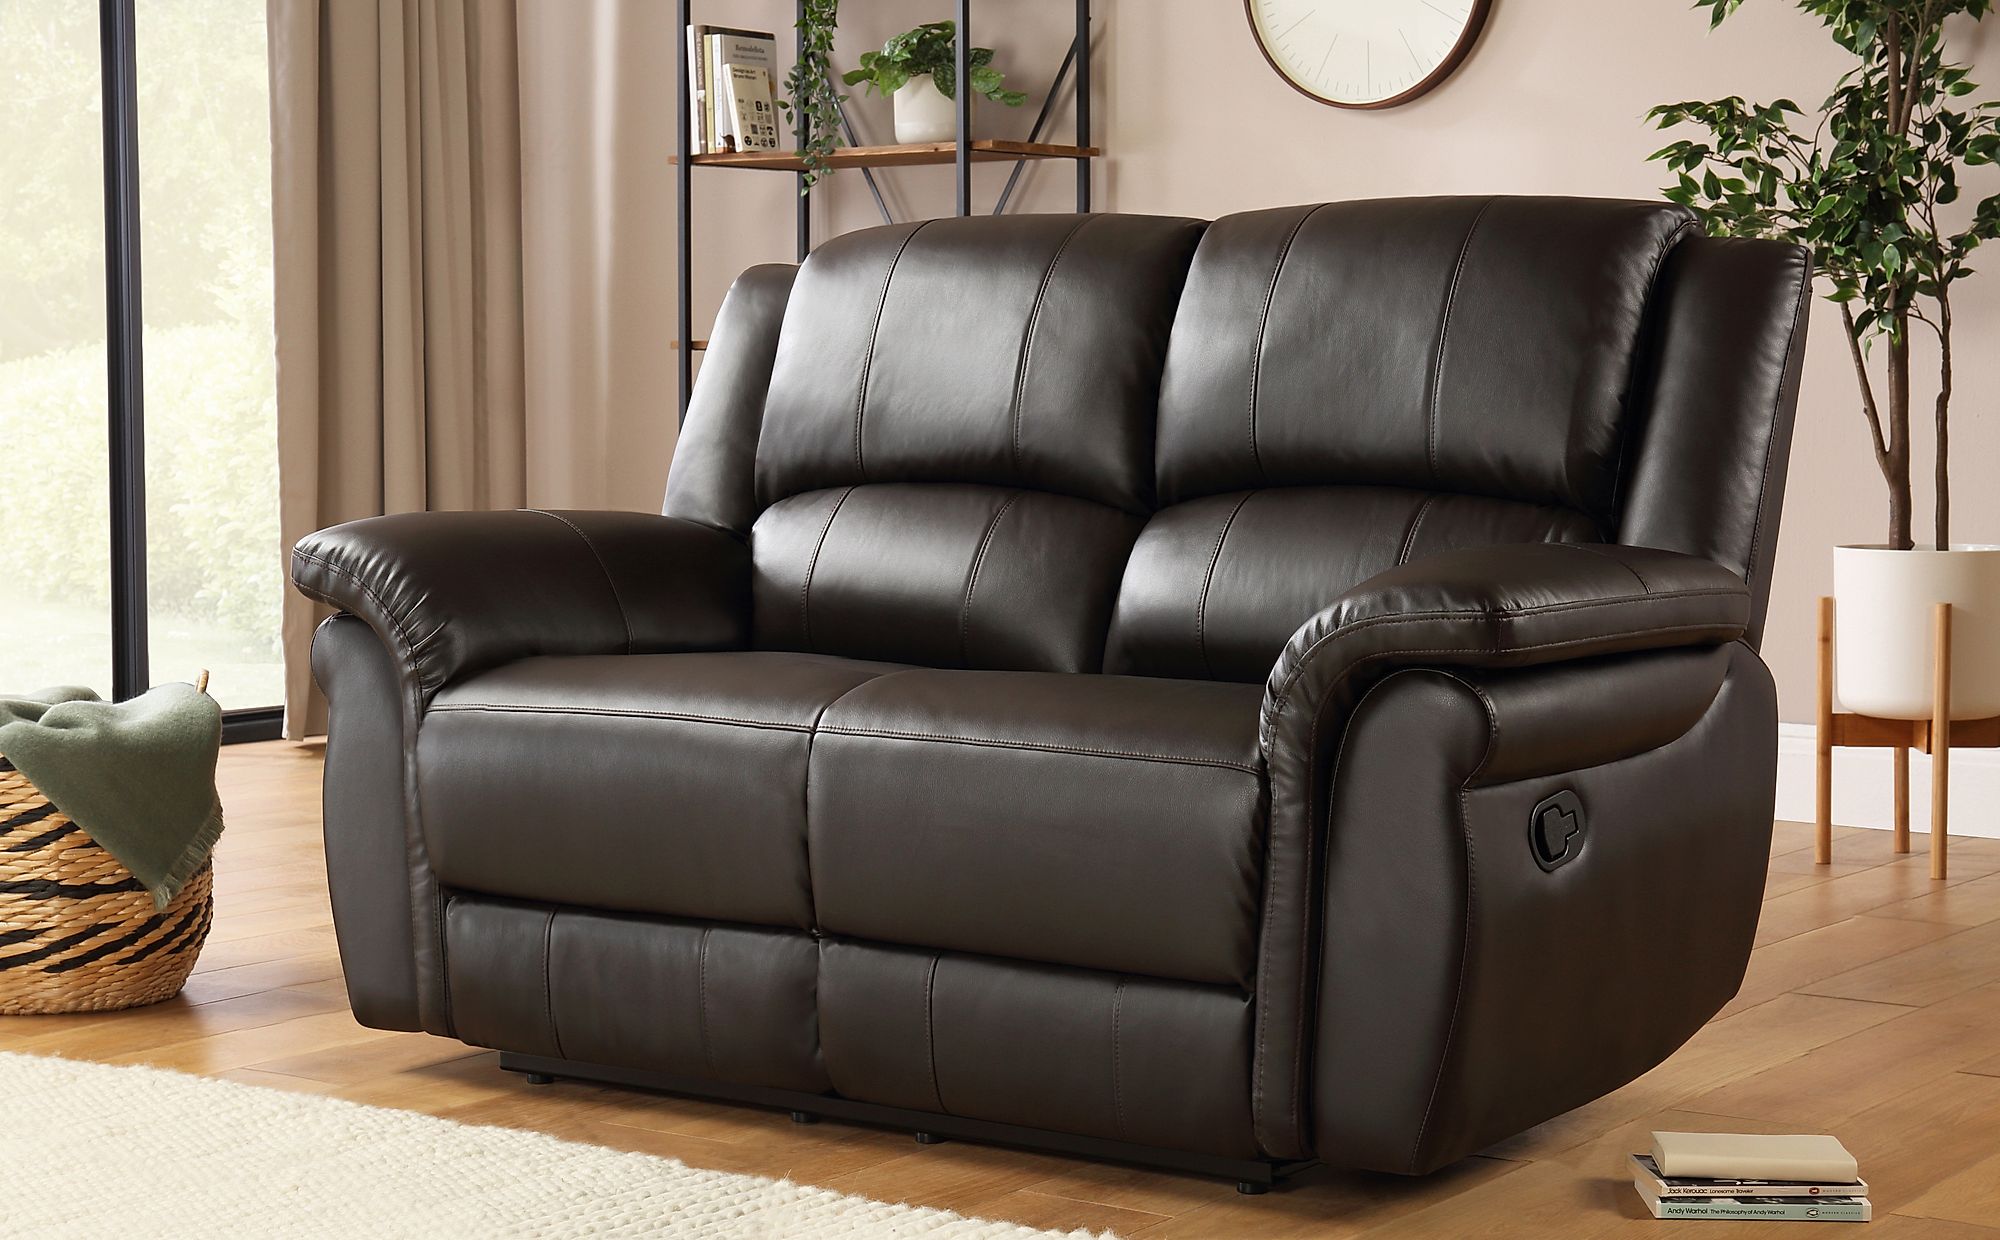 leather movie recliner sofa & loveseat